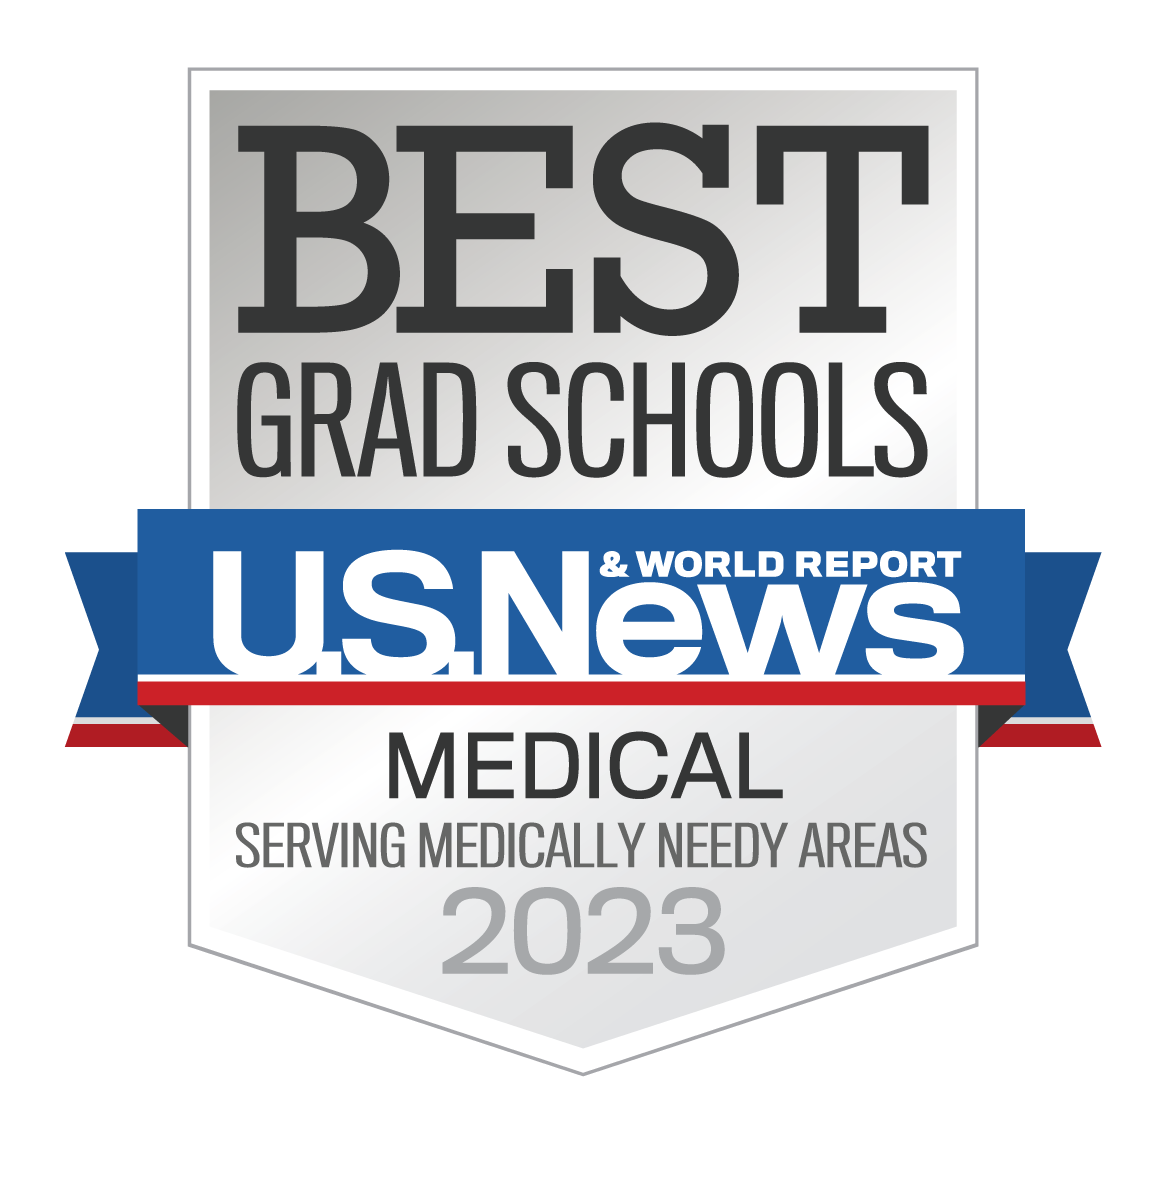 U.S. News Best Gradschools Serving Medically Needy Areas 2023